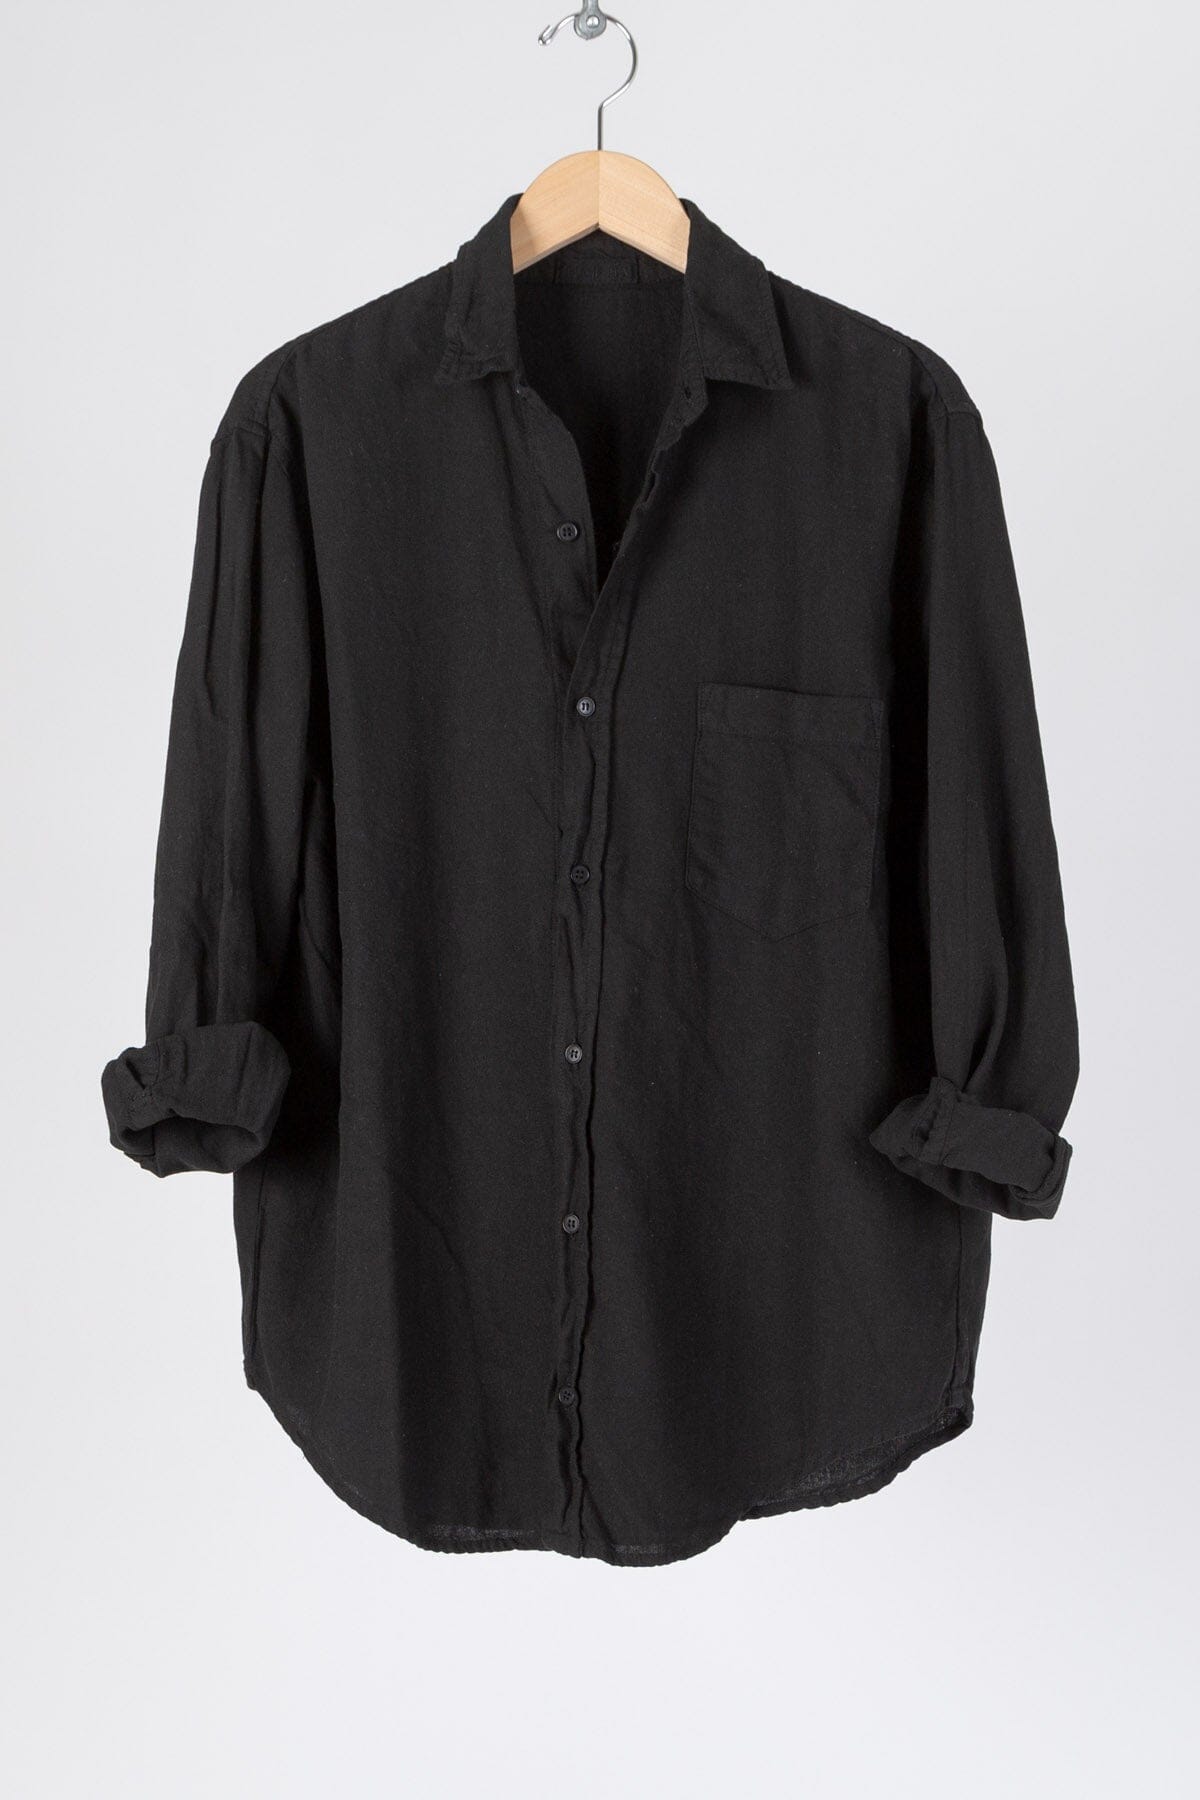 Joss - Textured Cotton S90 - 4269 Sale CP Shades black 4269